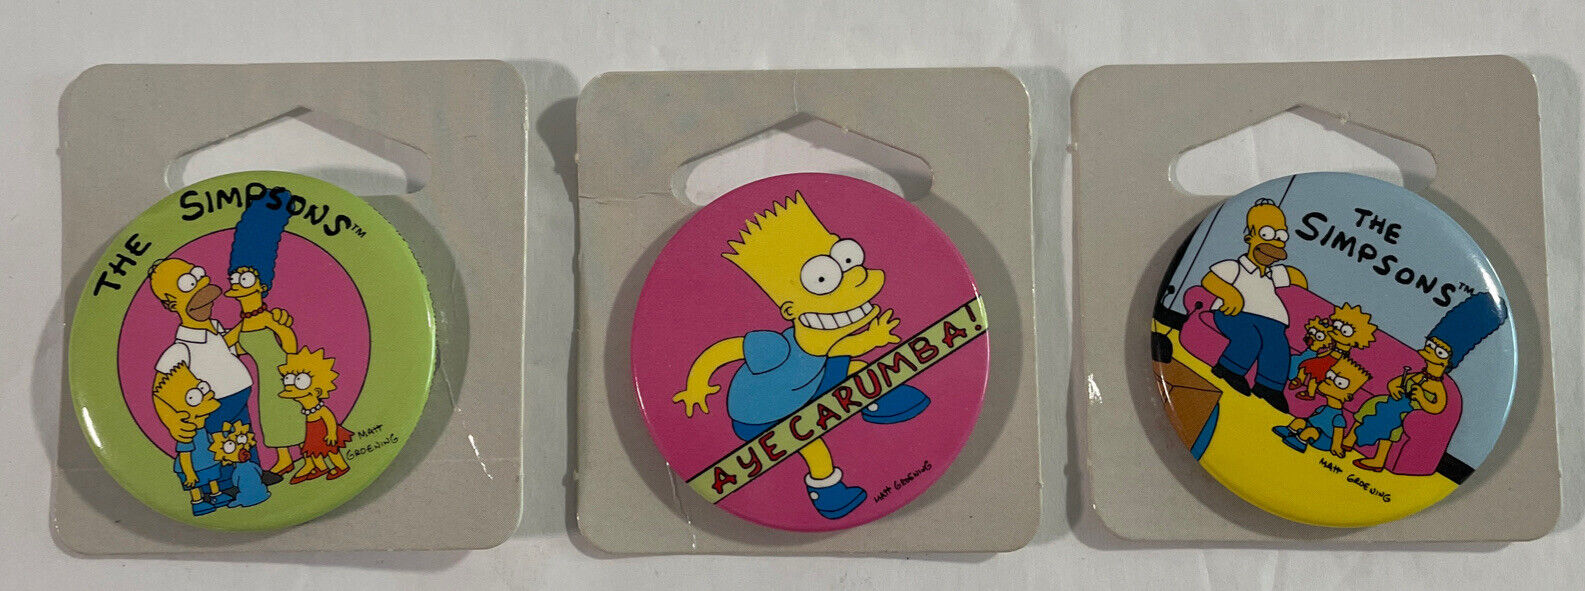 VTG 90s NOS The Simpsons 3 Button Set Homer Bart Marge Maggie Lisa Pins Pinbacks